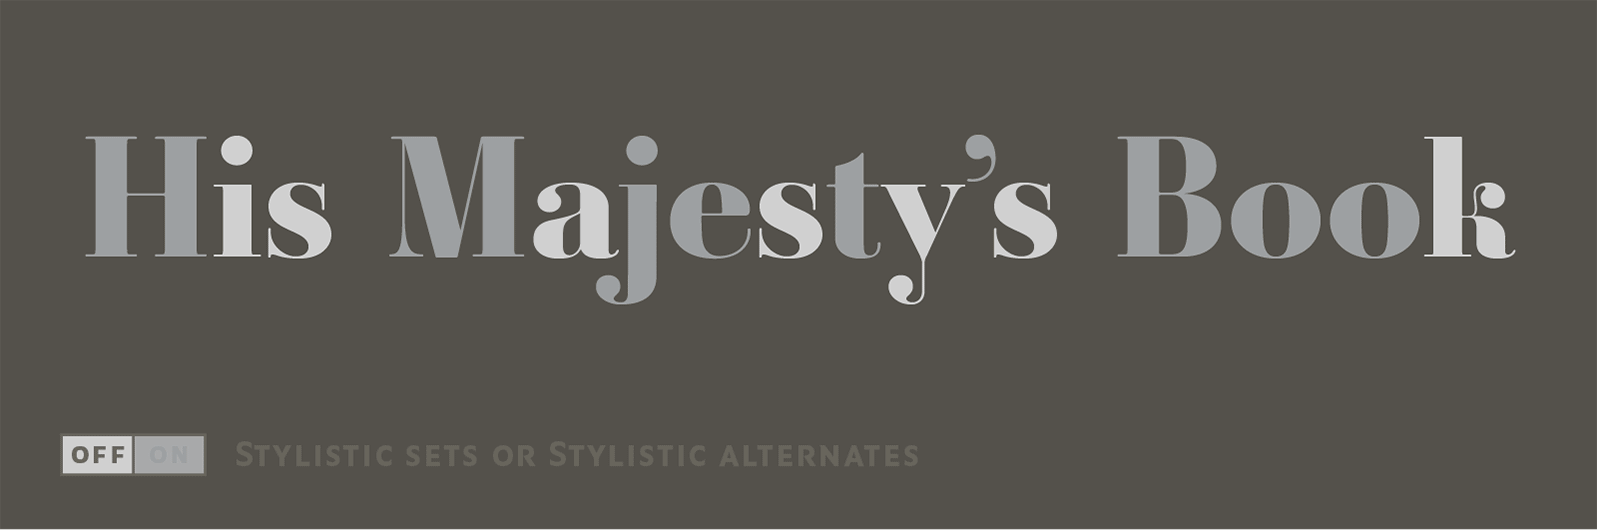 Stylistic sets and Stylistic Alternates